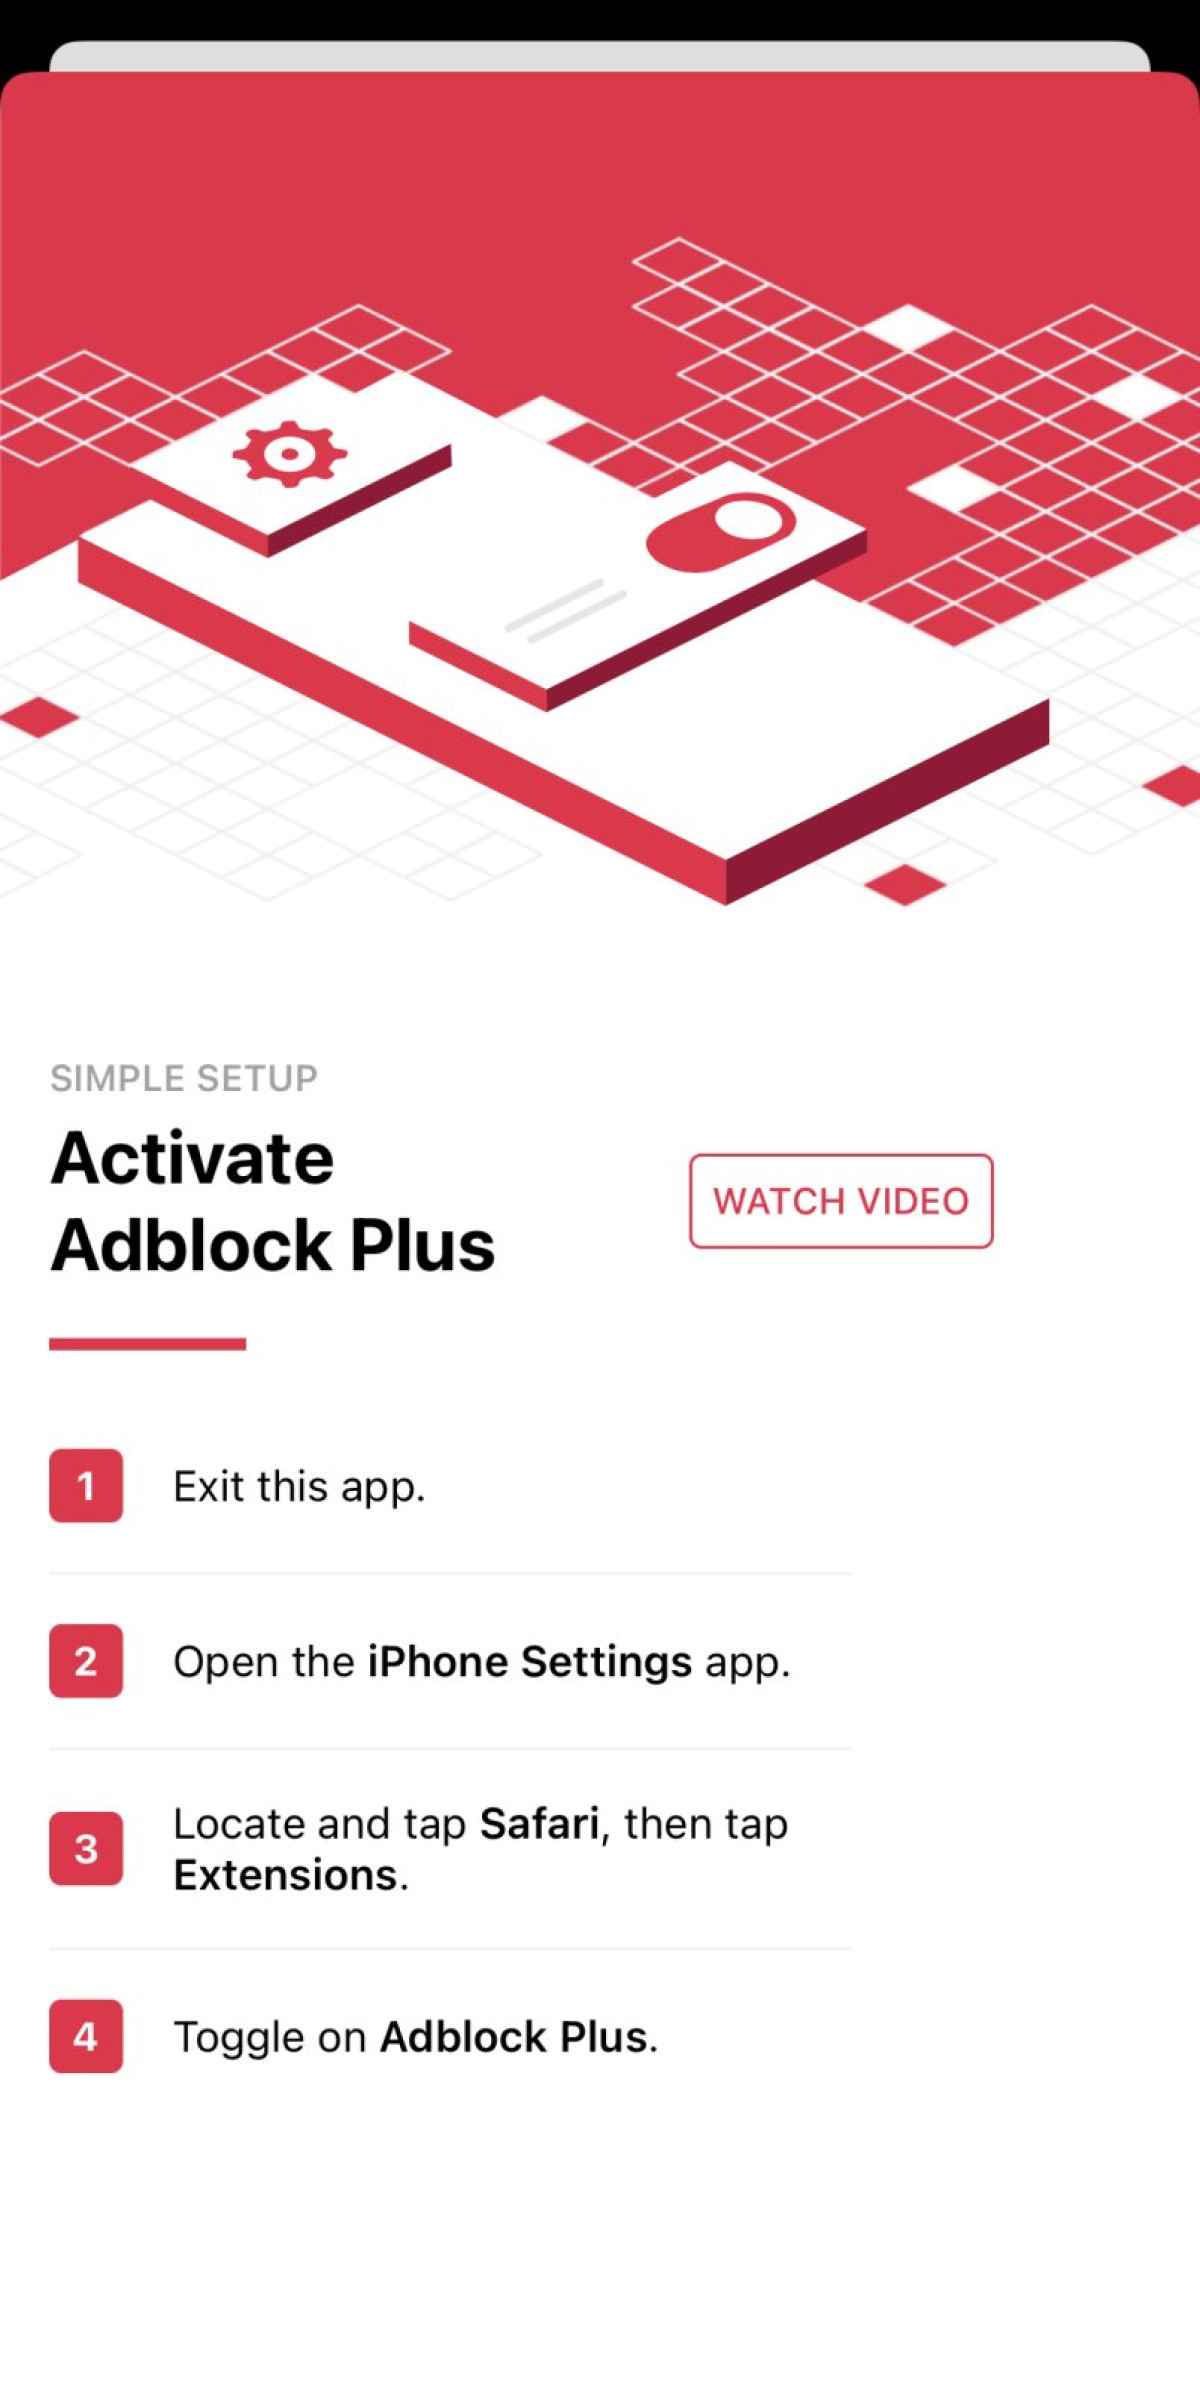 Adblock plus's activation guide on iOS